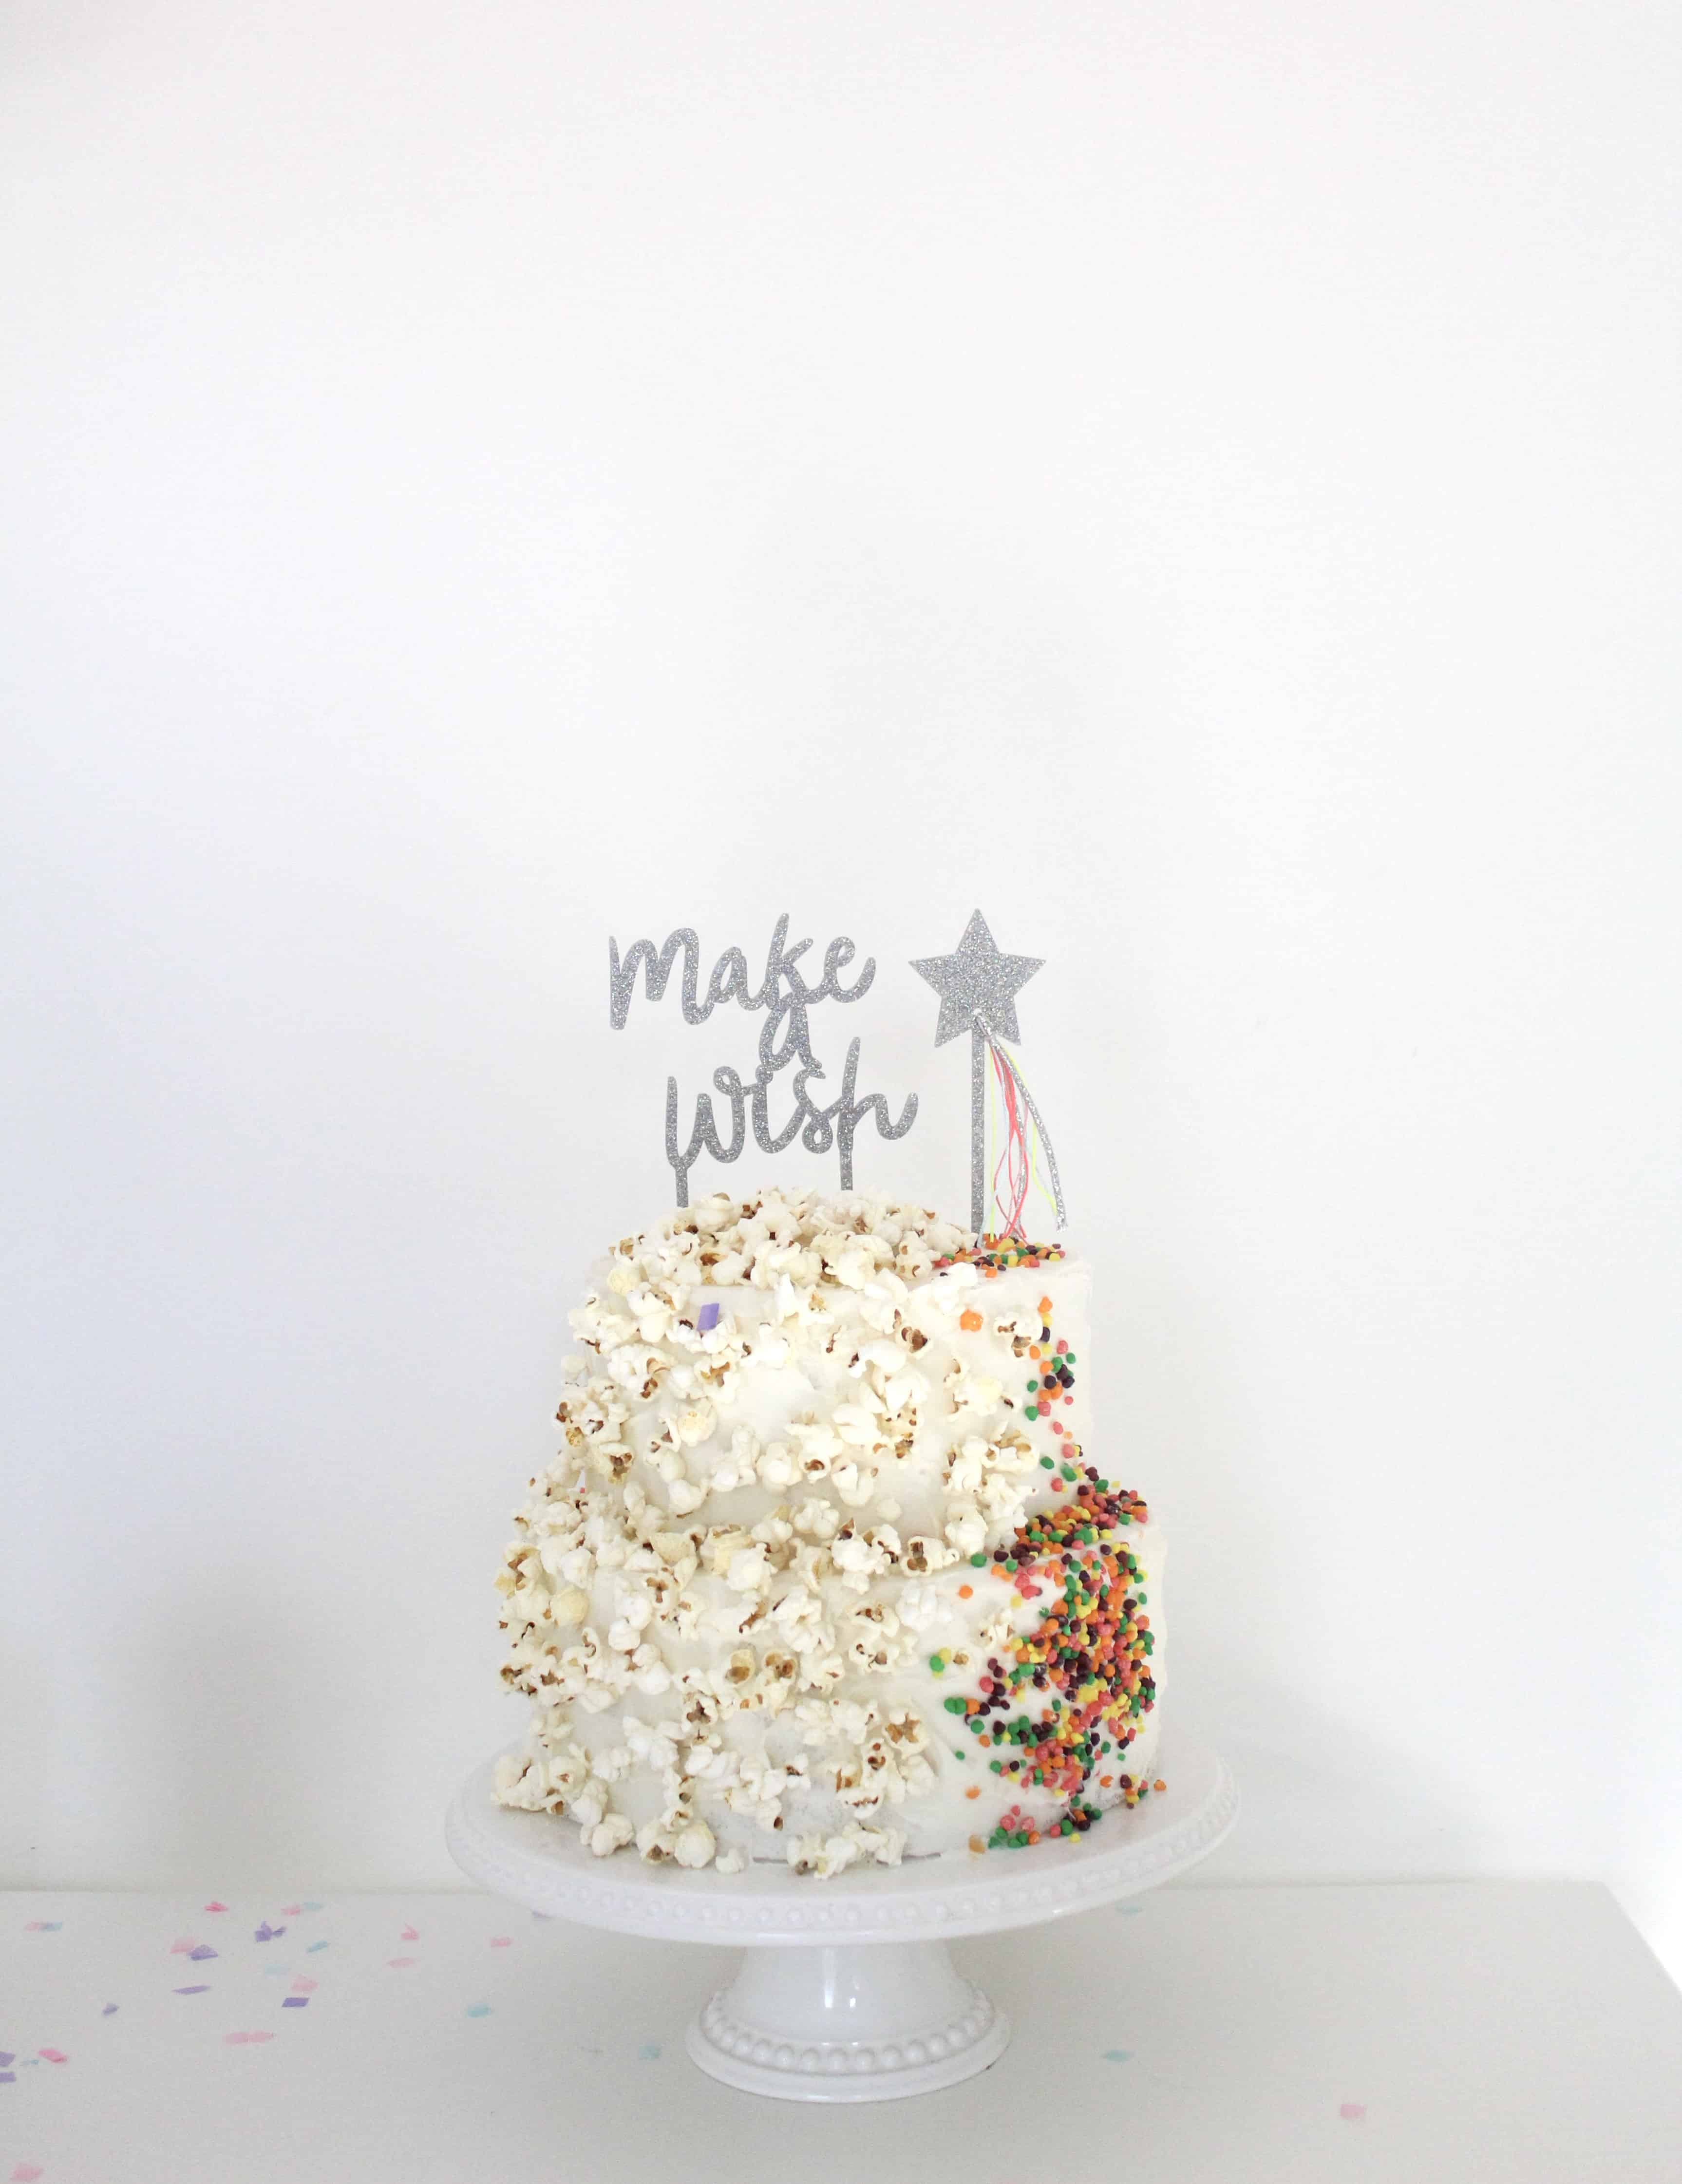 Popcorn and nerds movie themed cake